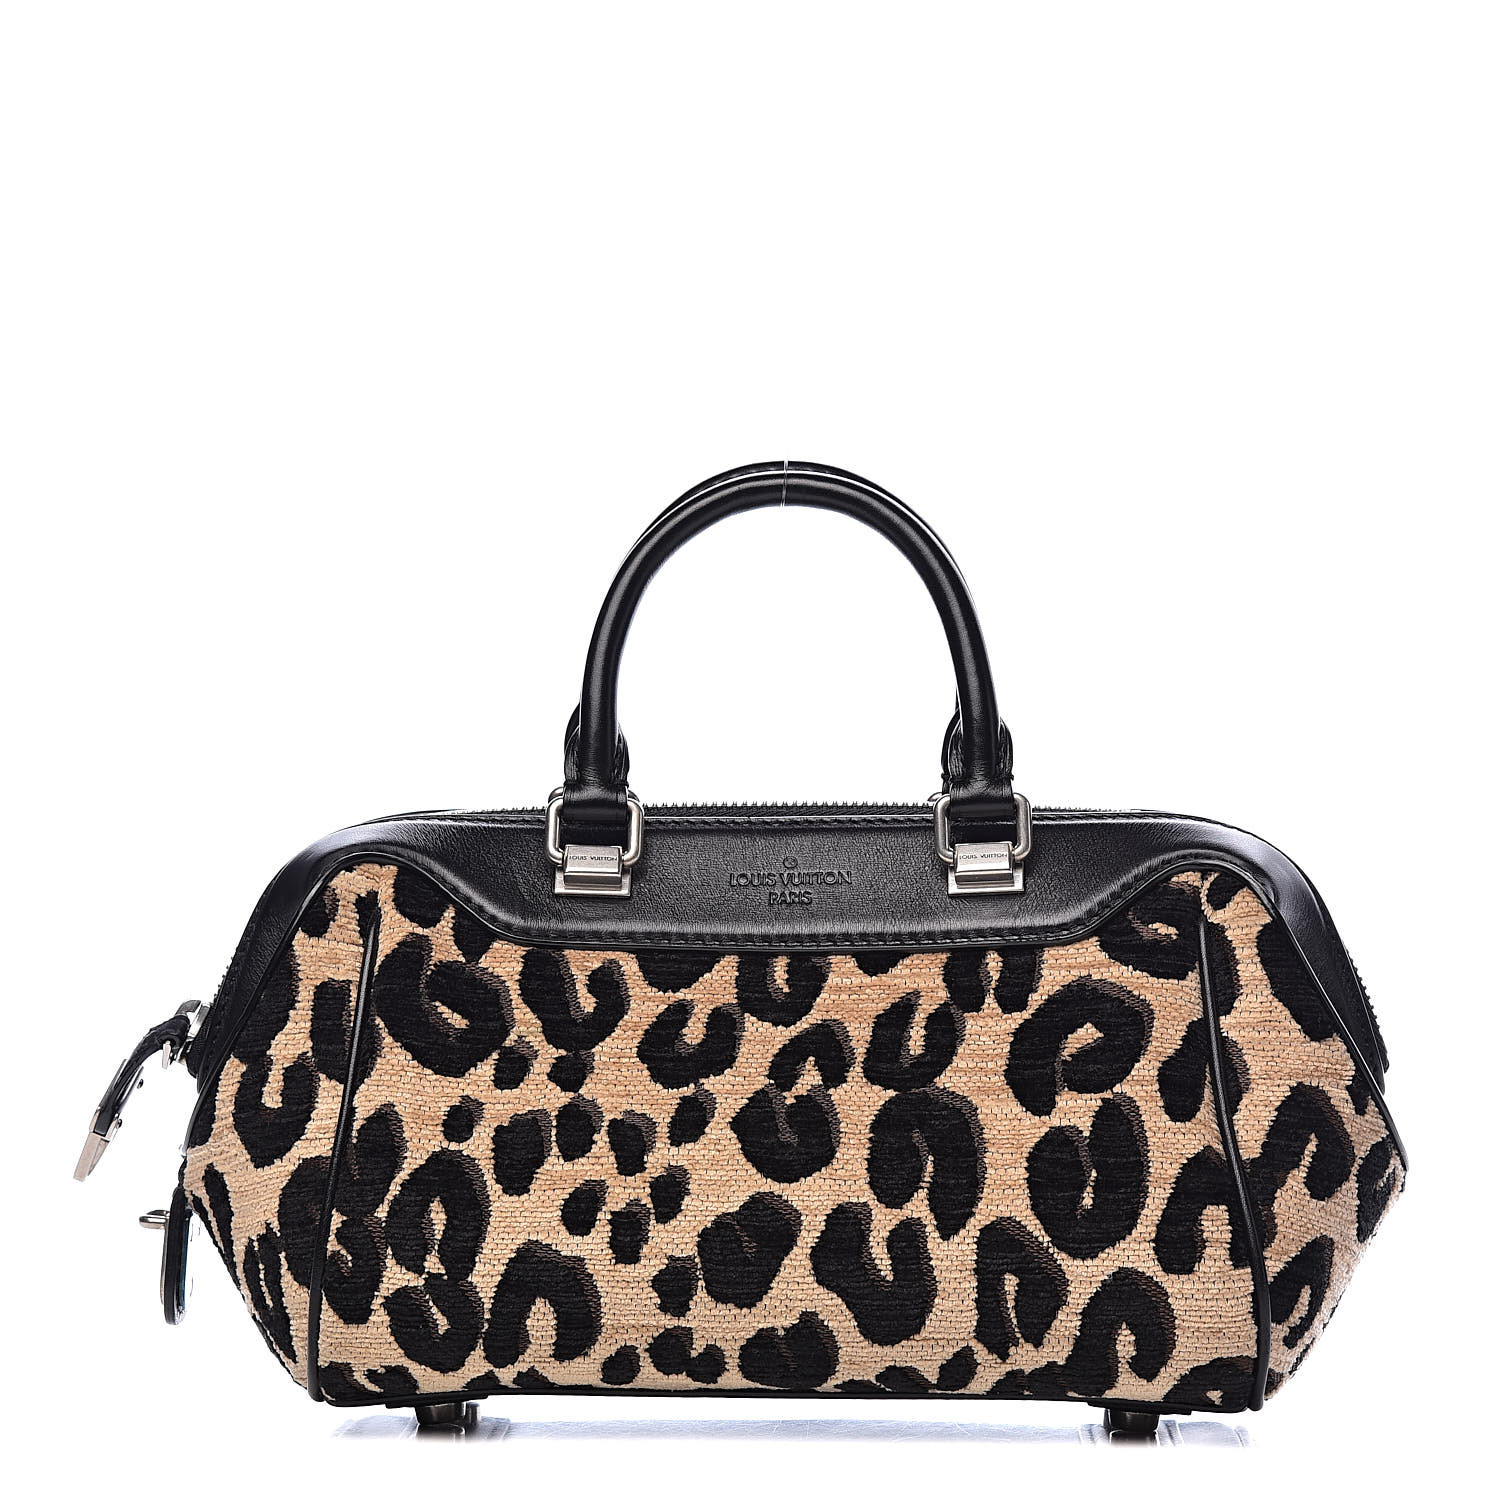 LOUIS VUITTON Jacquard Velvet Leopard Print Stephen Sprouse Baby Bag 505823